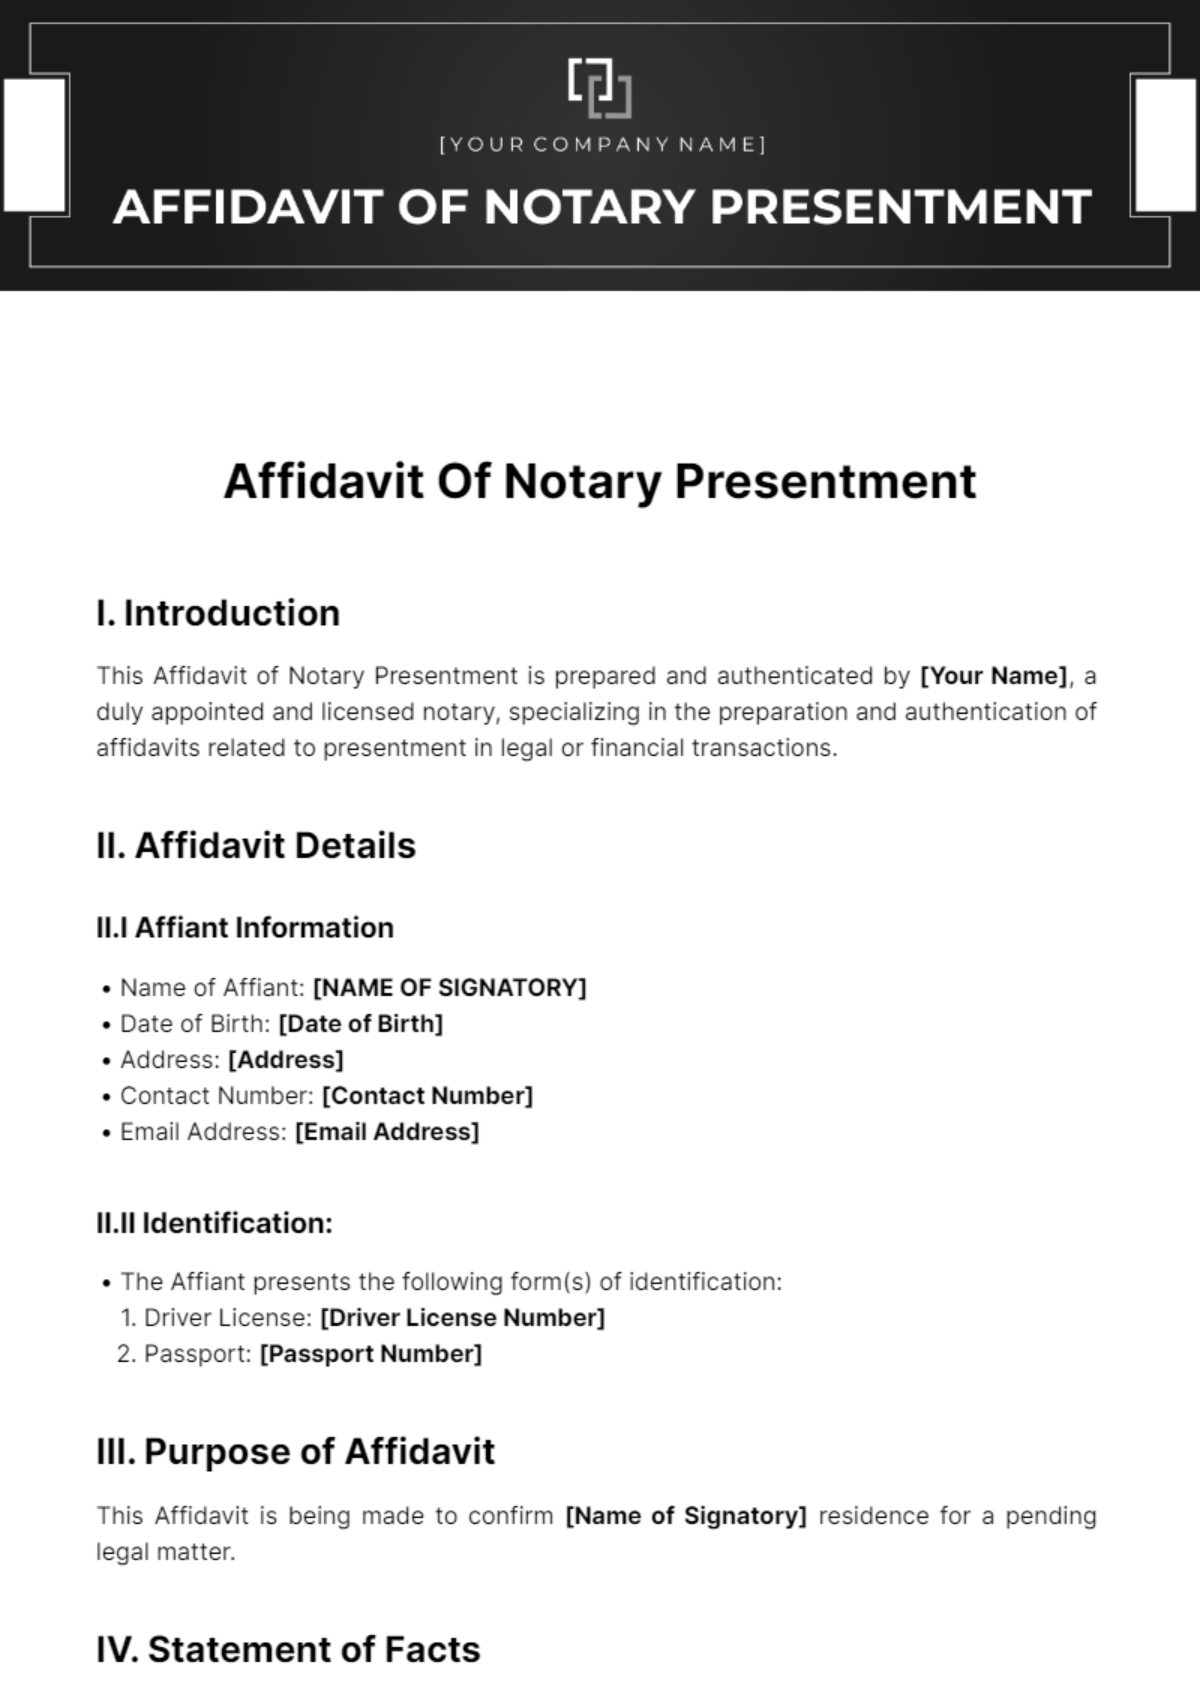 Free Affidavit Of Notary Presentment Template